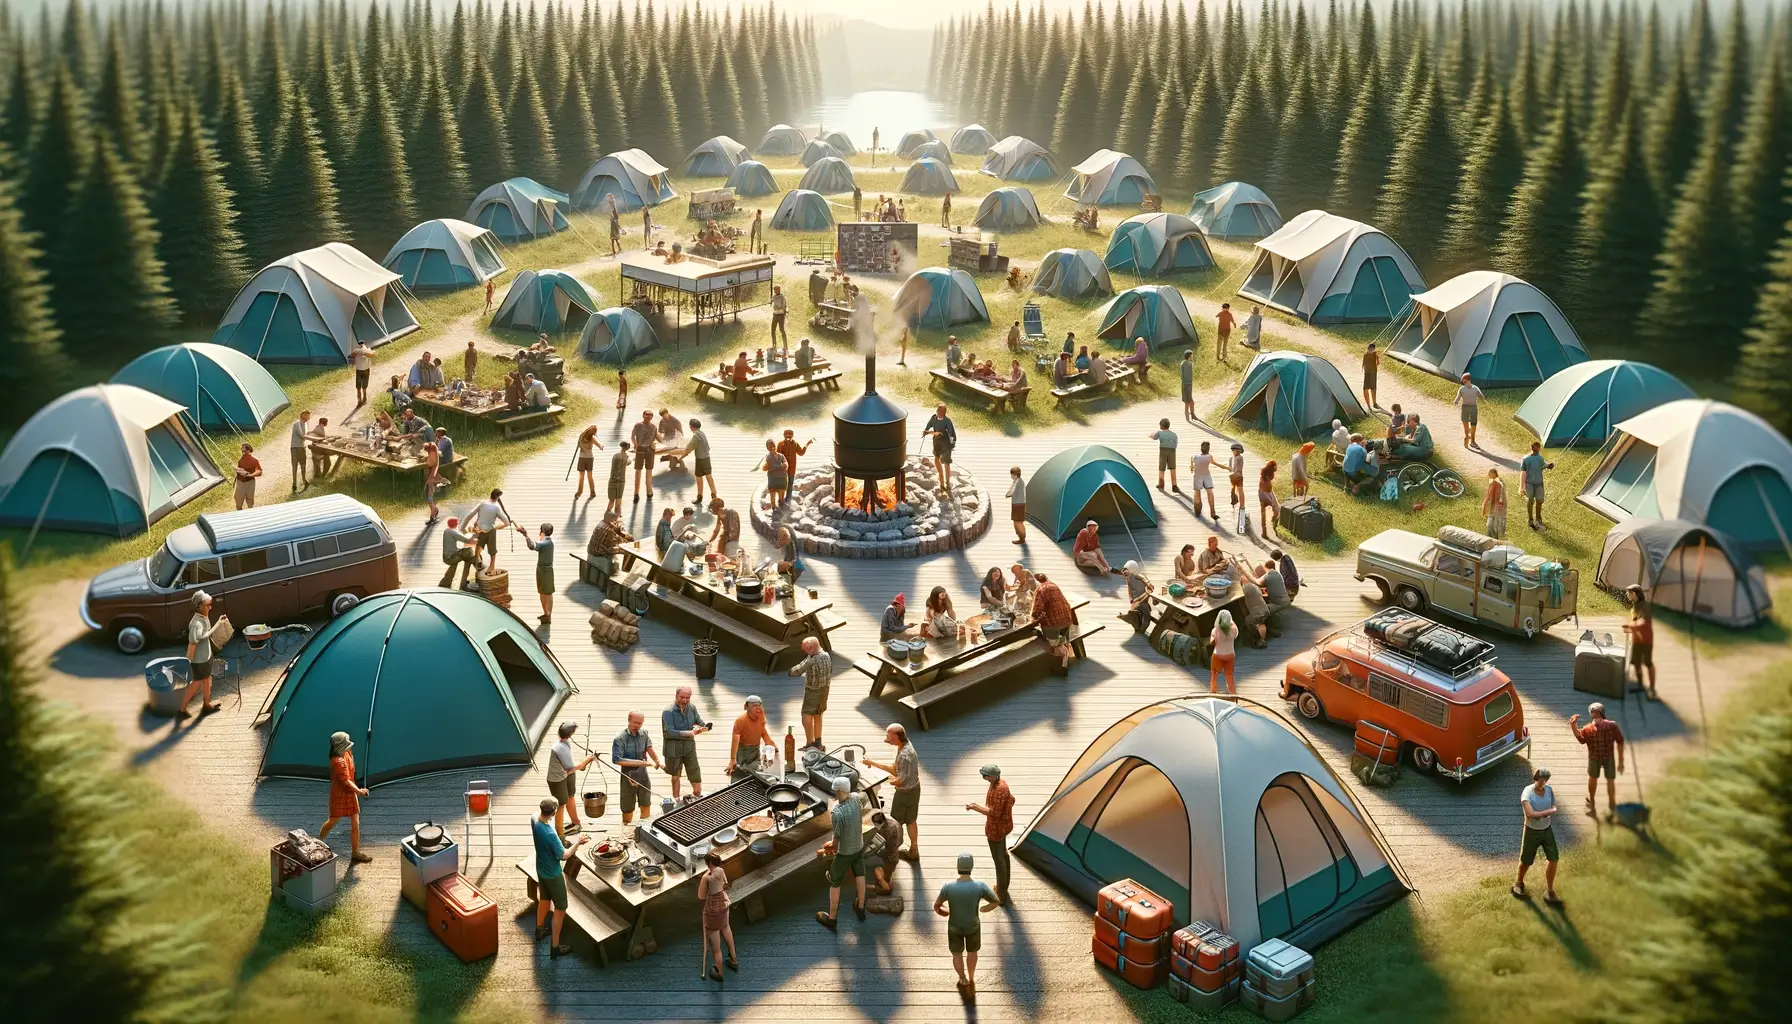 Group Camping: Coordinating Larger Camping Parties